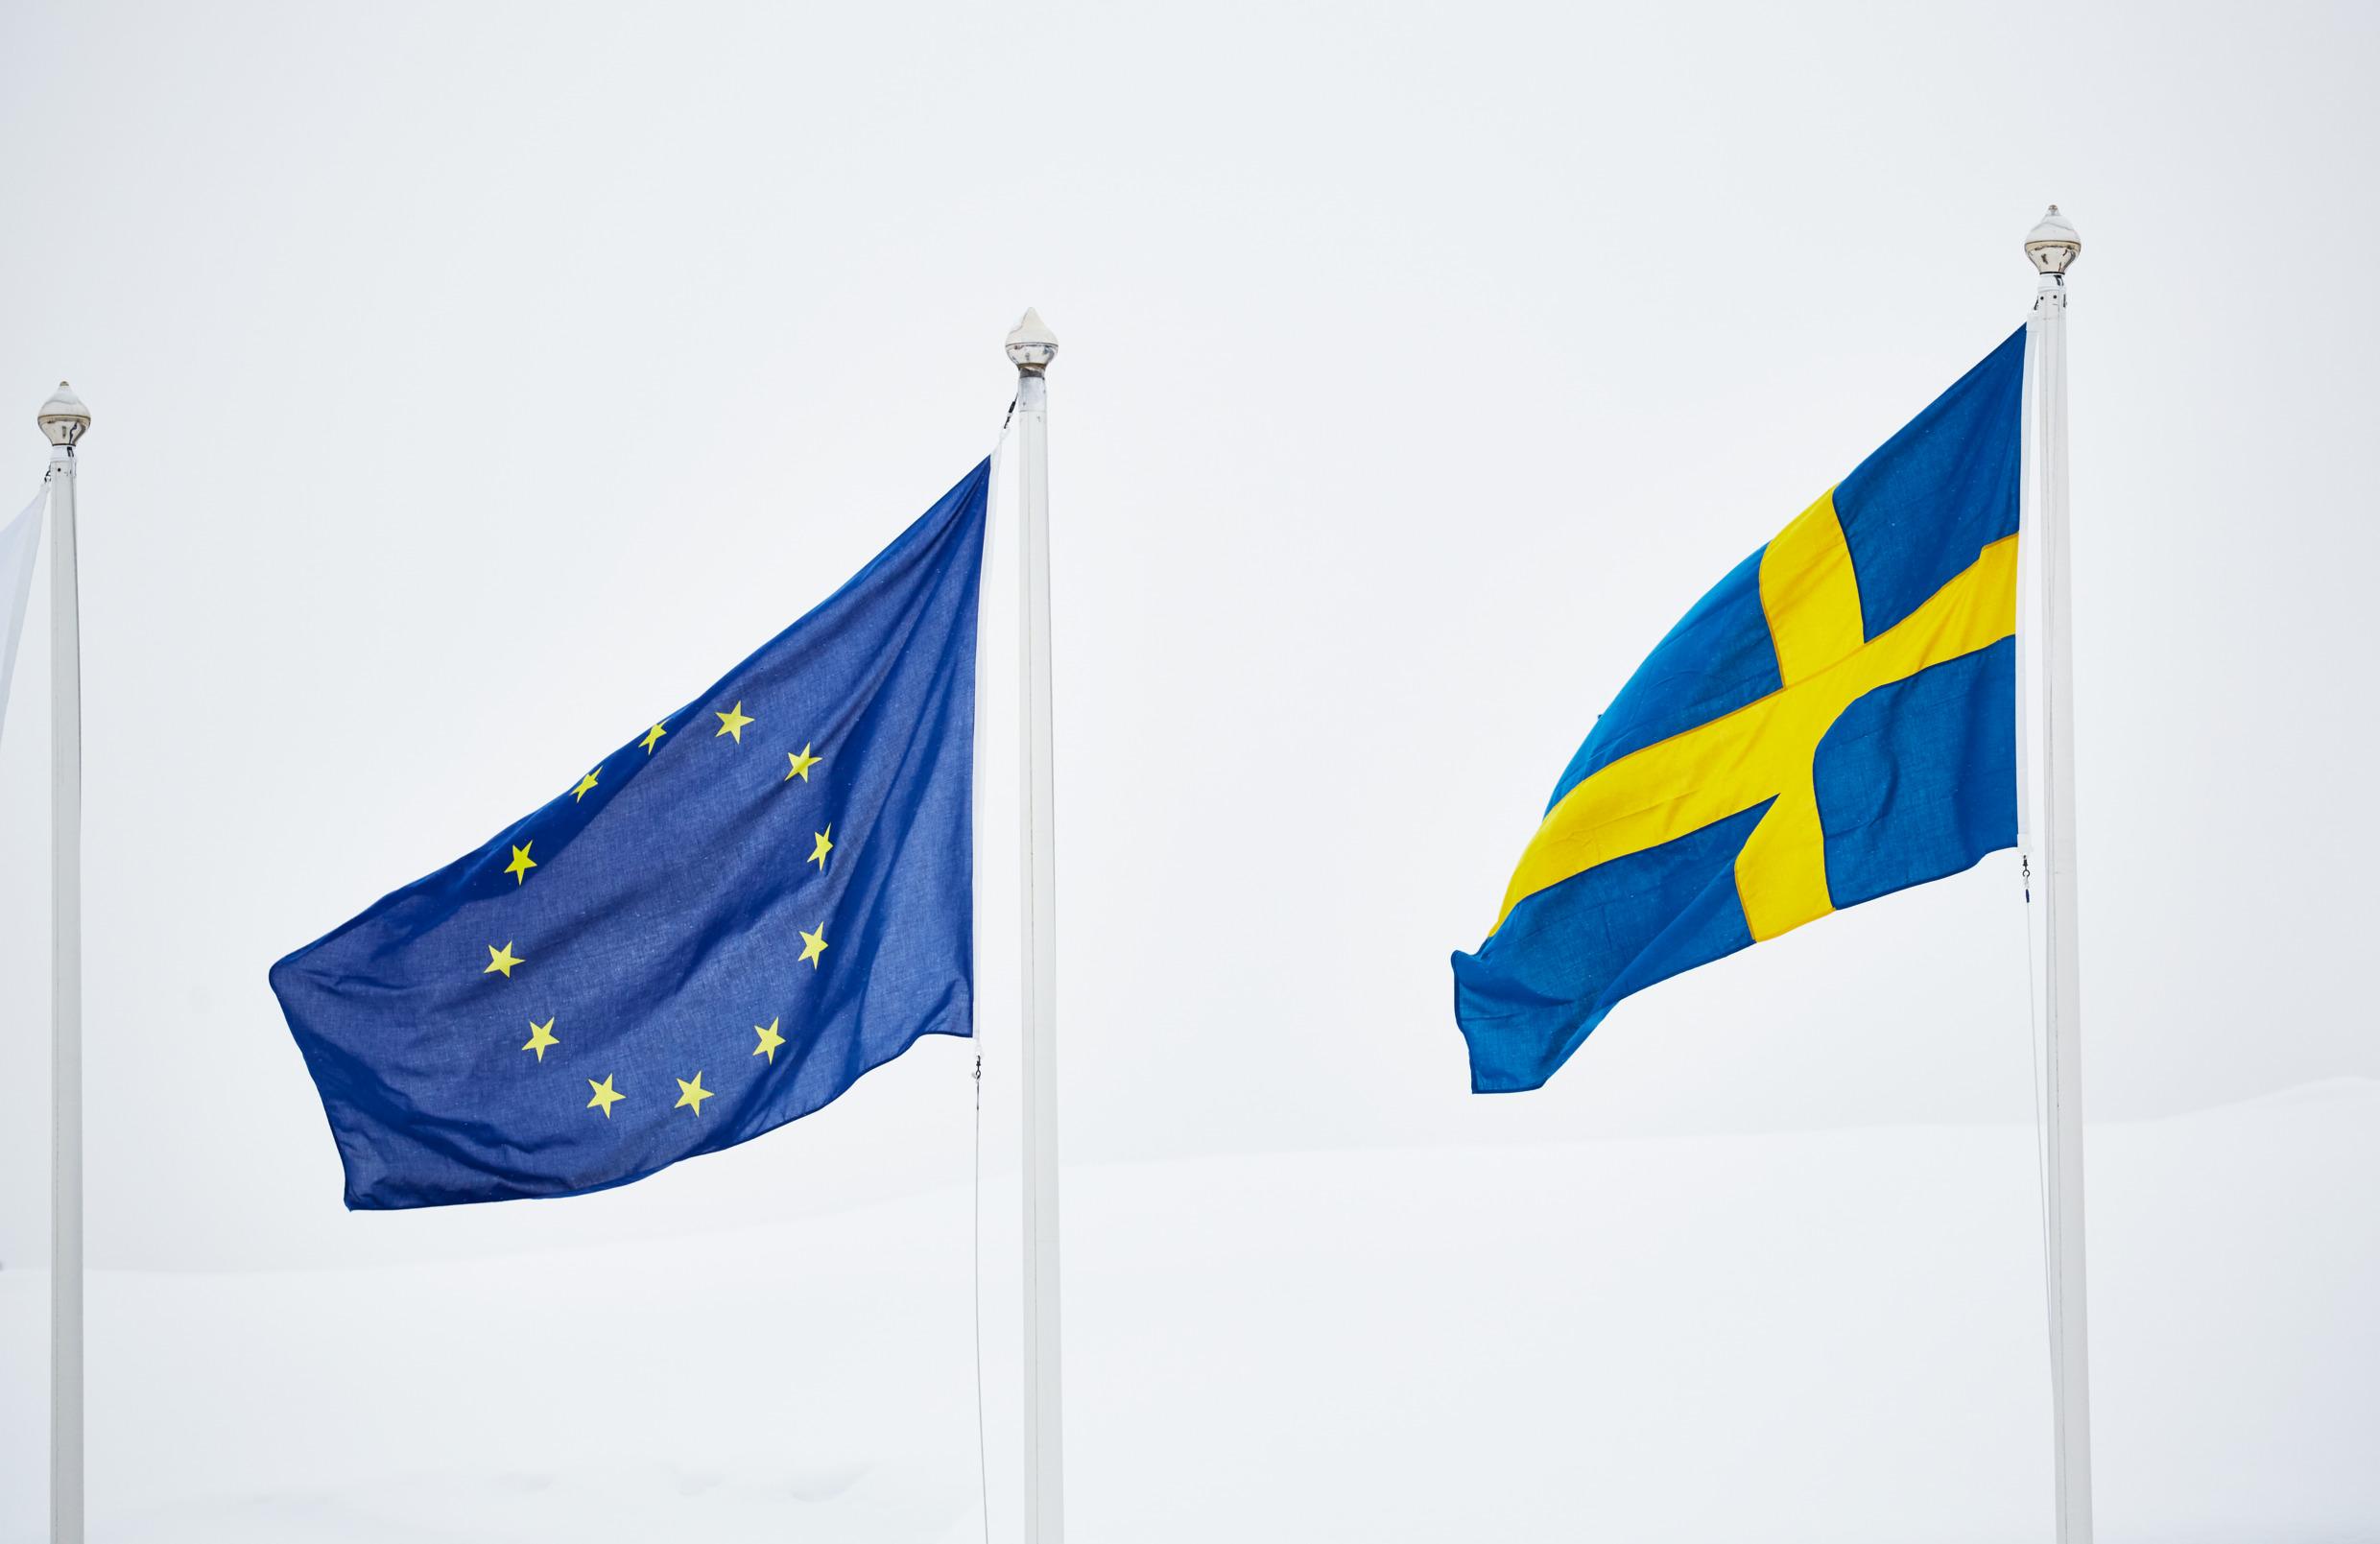 Sweden in the EU